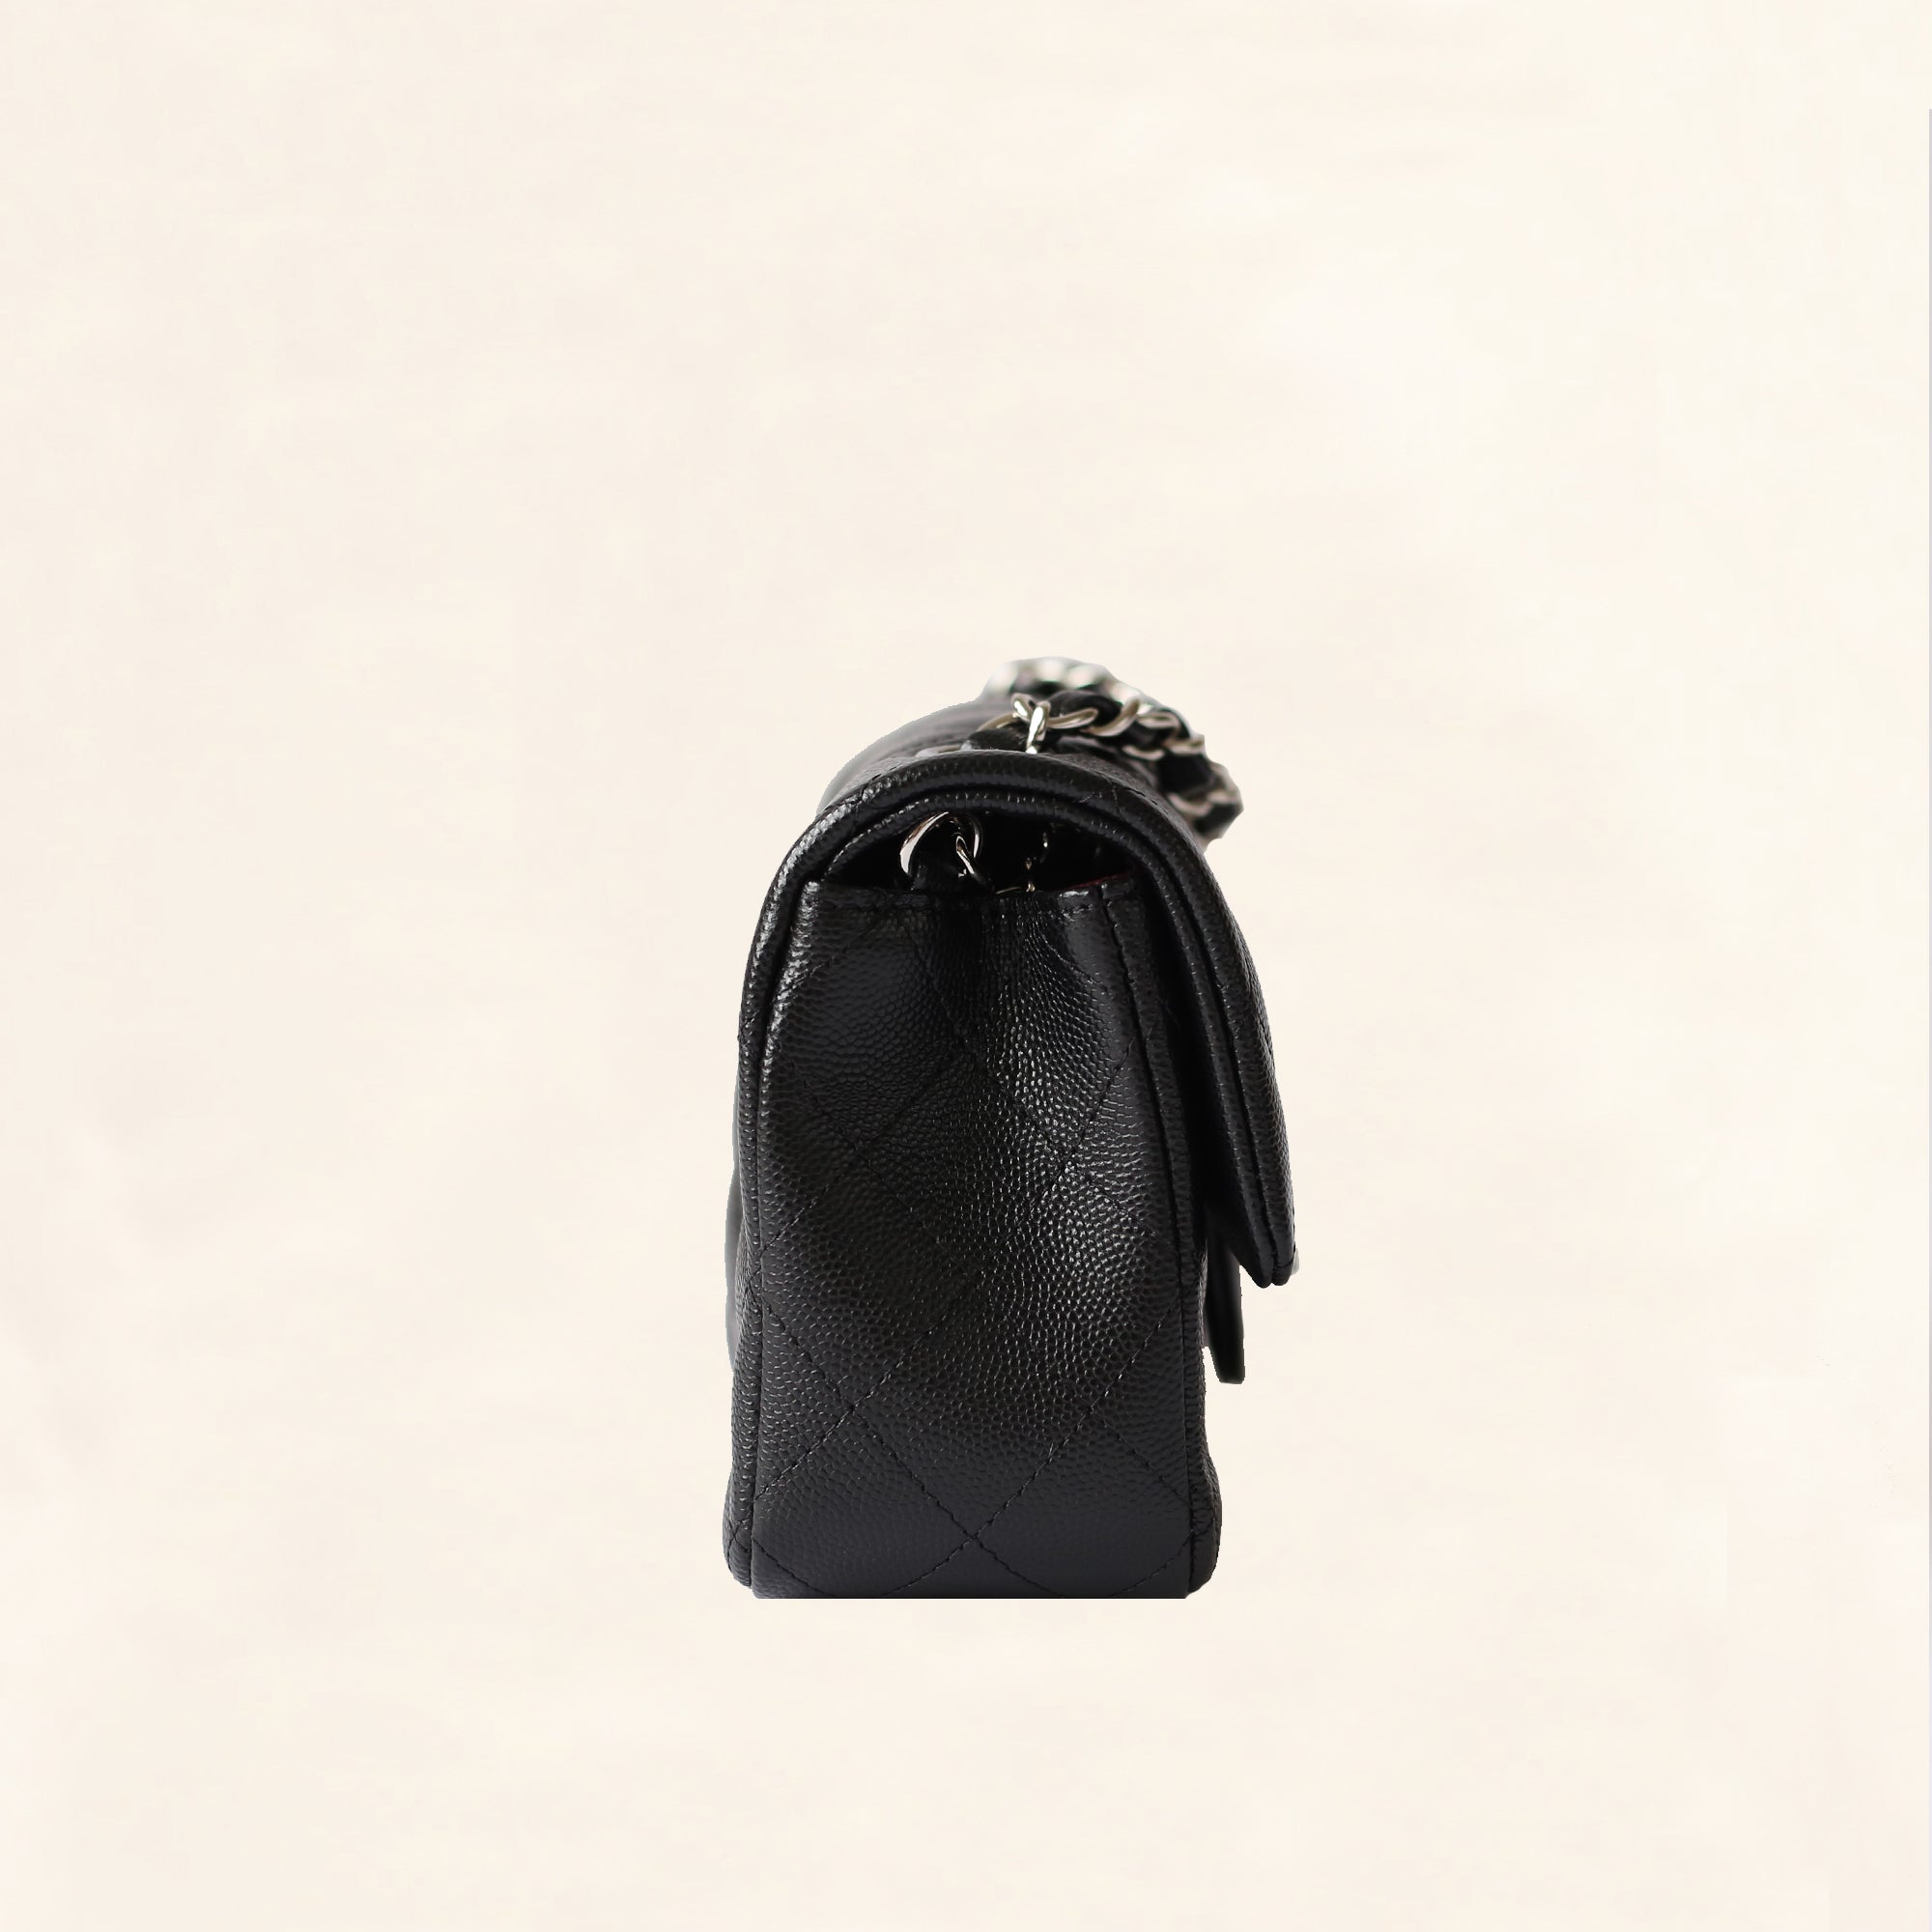 Chanel Caviar Quilted Pochette - Black Mini Bags, Handbags - CHA166702